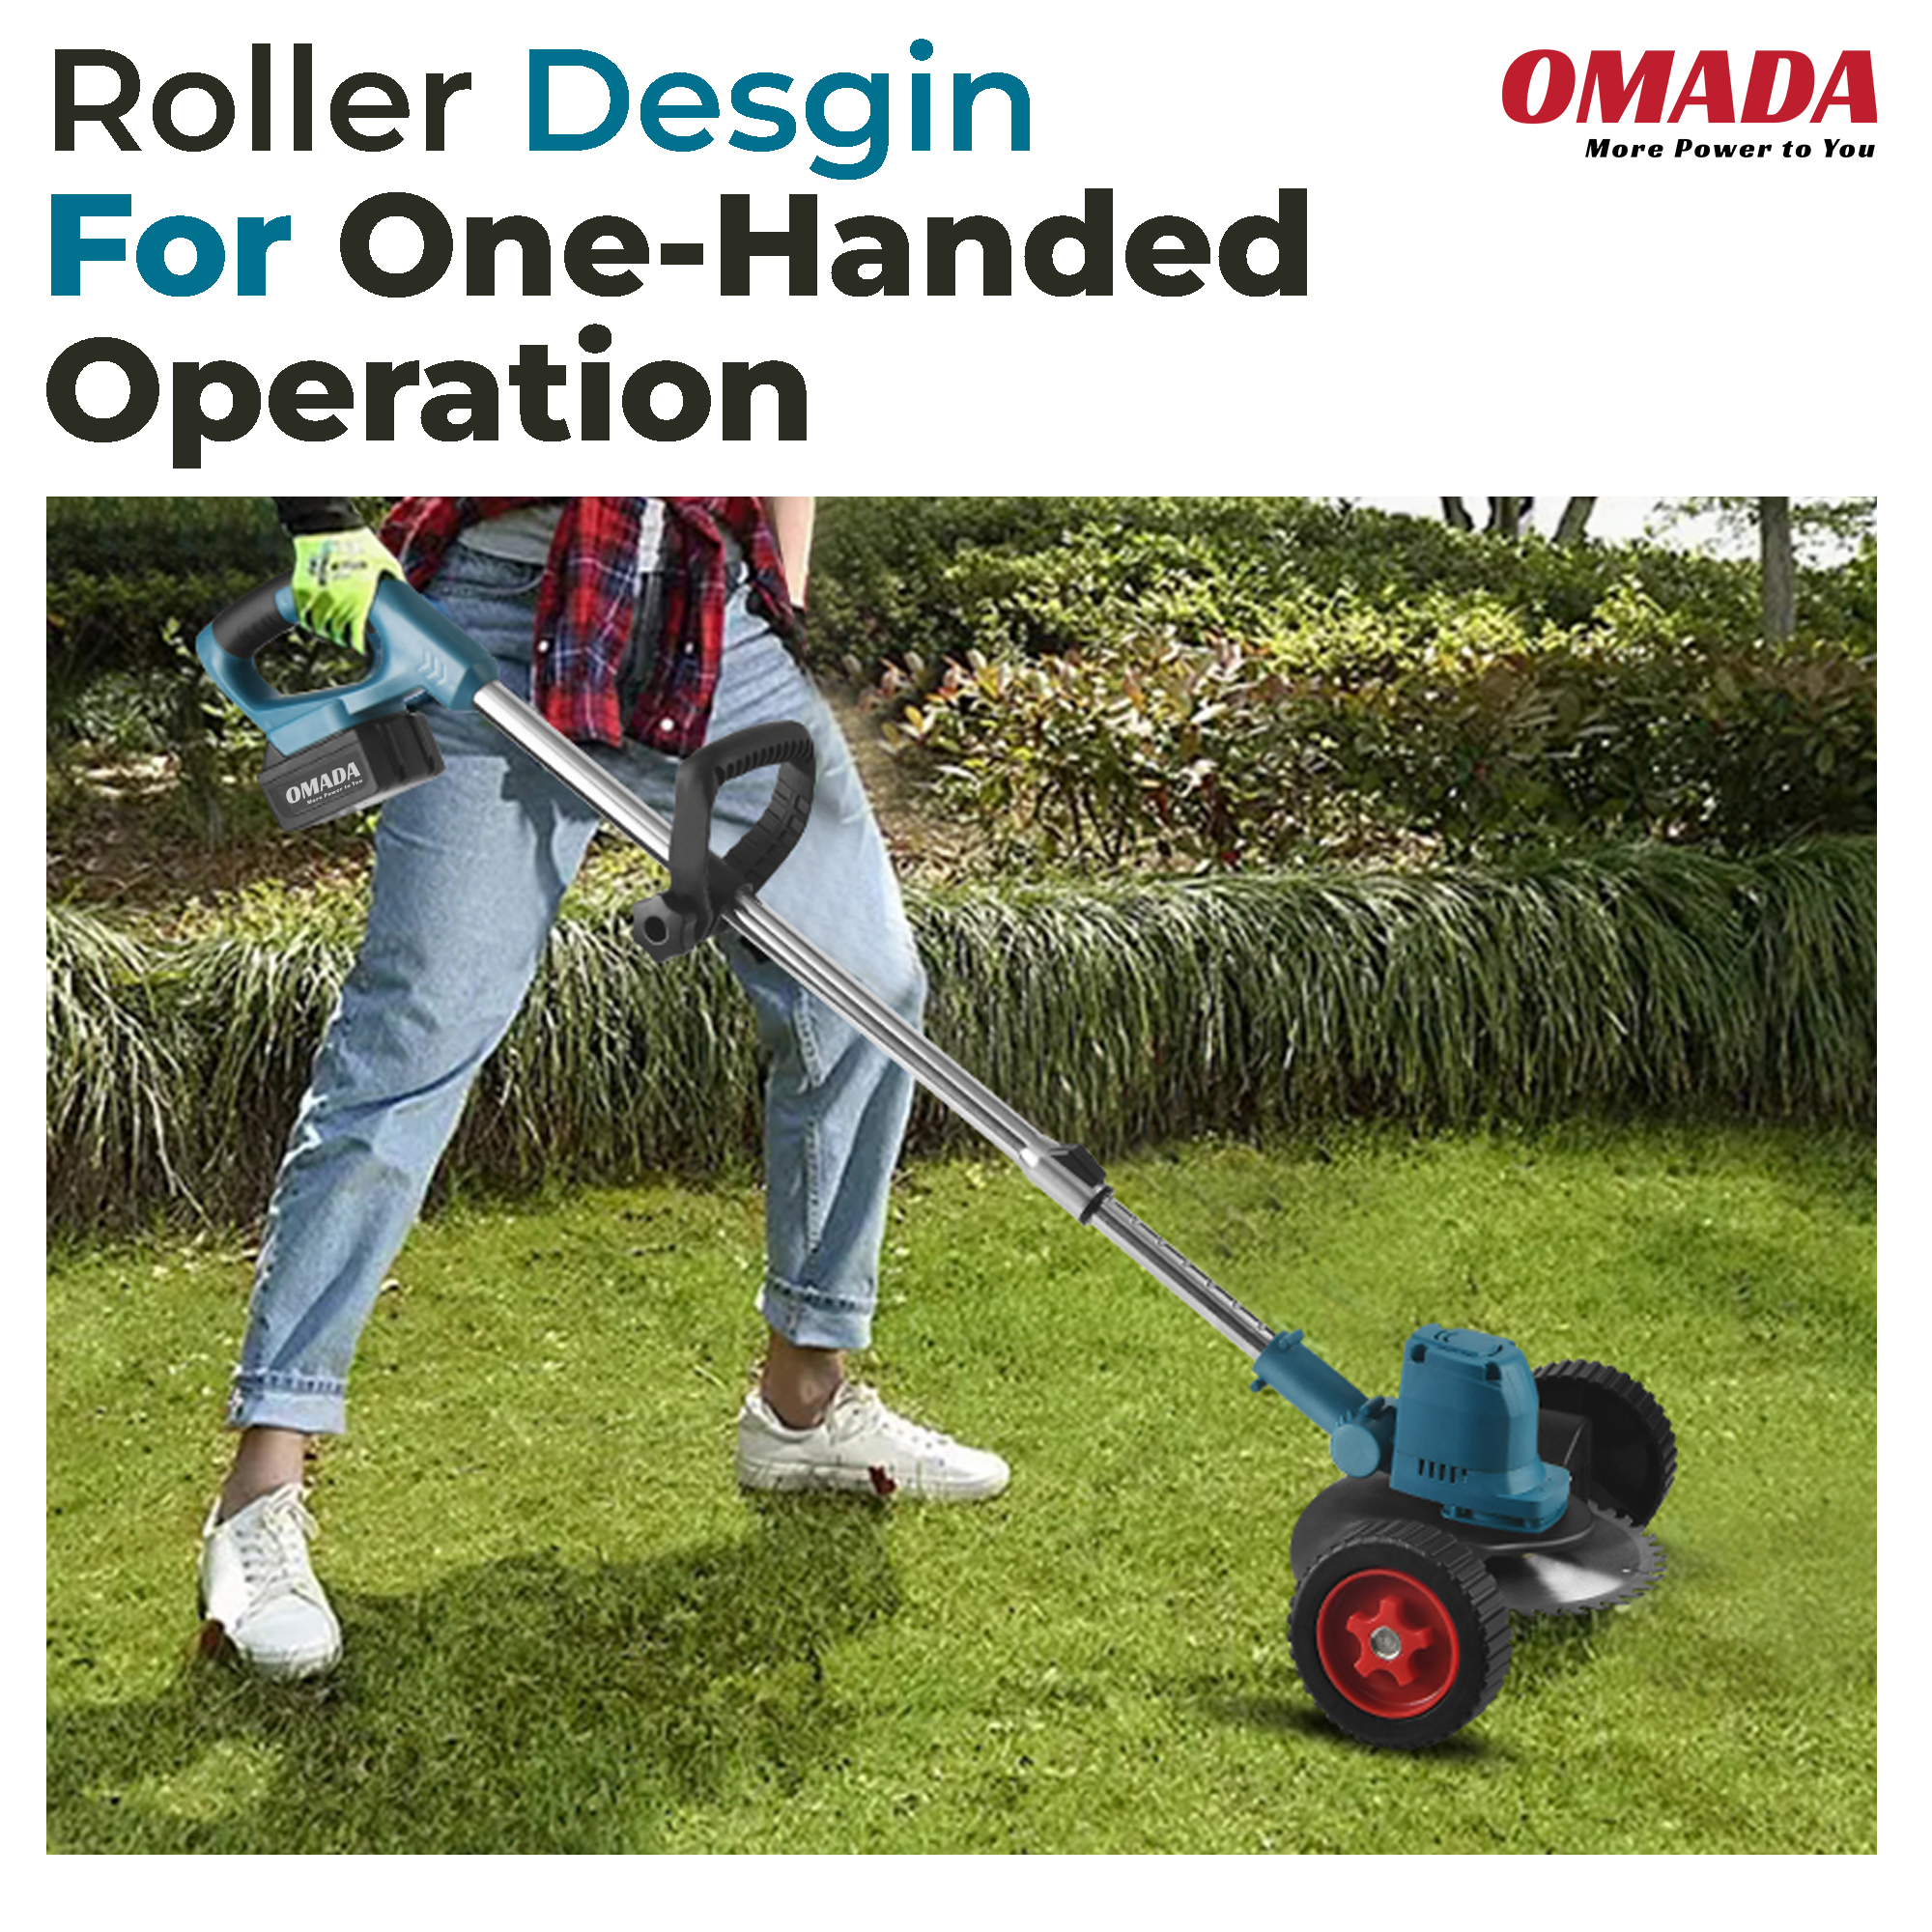 https://omadatools.com/wp-content/uploads/2022/10/OMD-0025N-Cordless-Lawn-Mower-Grass-Cutting-Tools-E.jpg